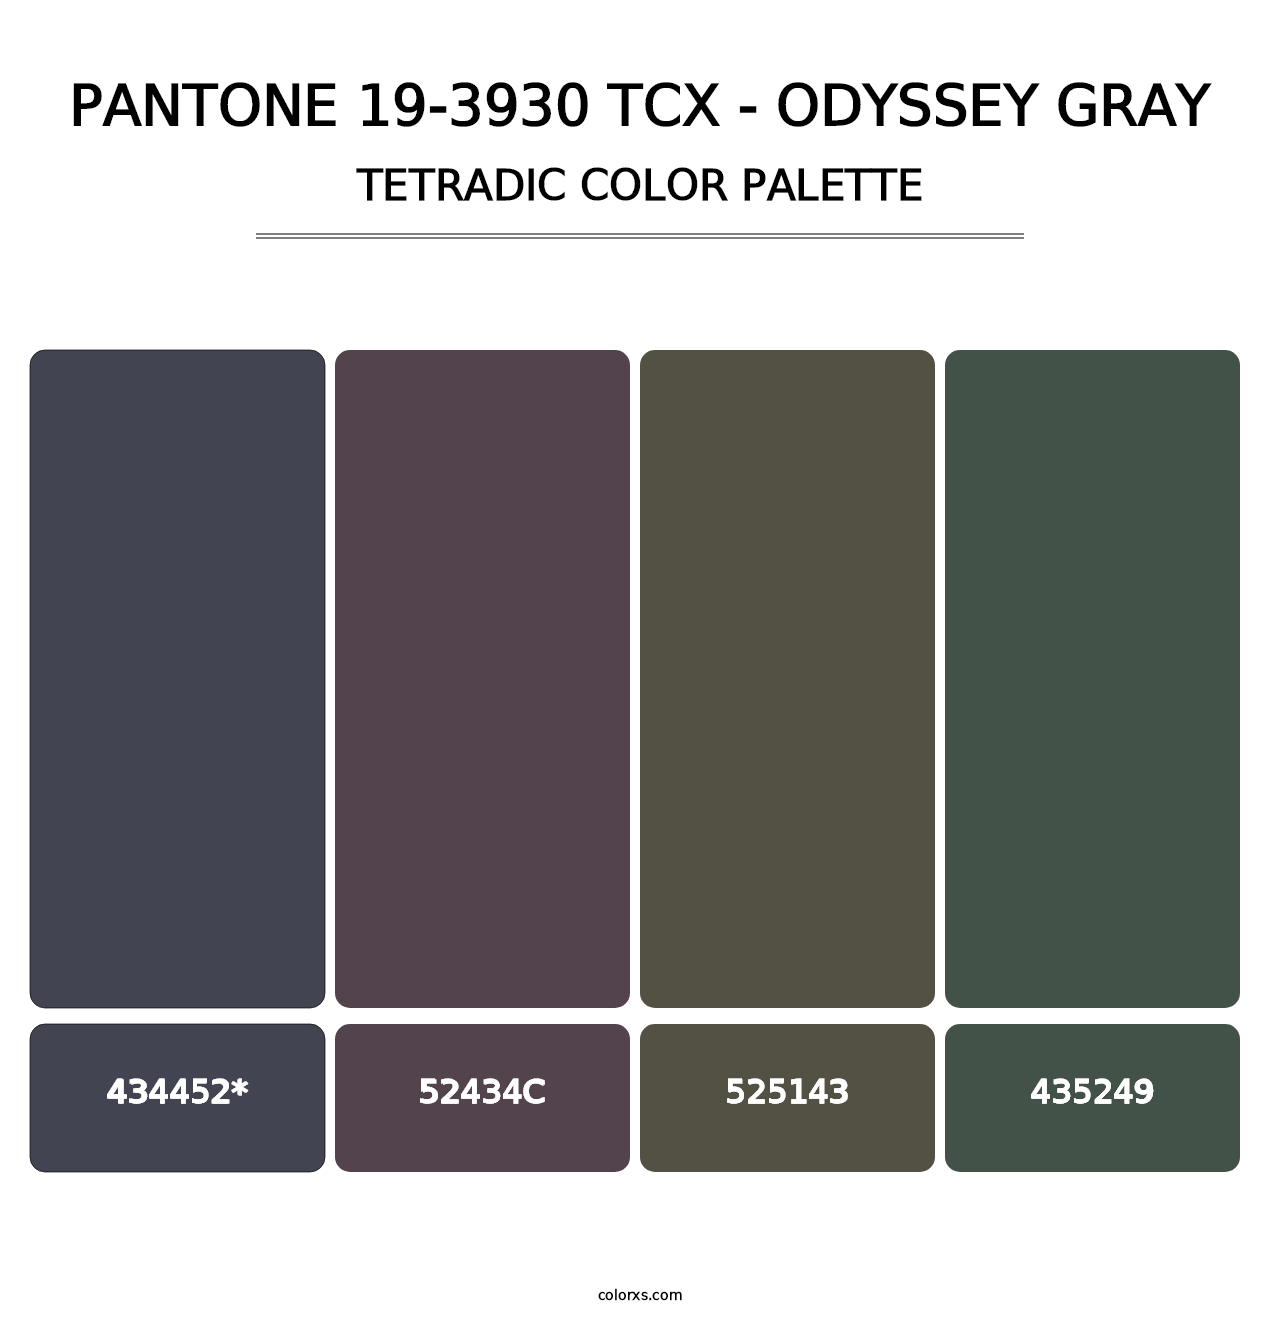 PANTONE 19-3930 TCX - Odyssey Gray - Tetradic Color Palette